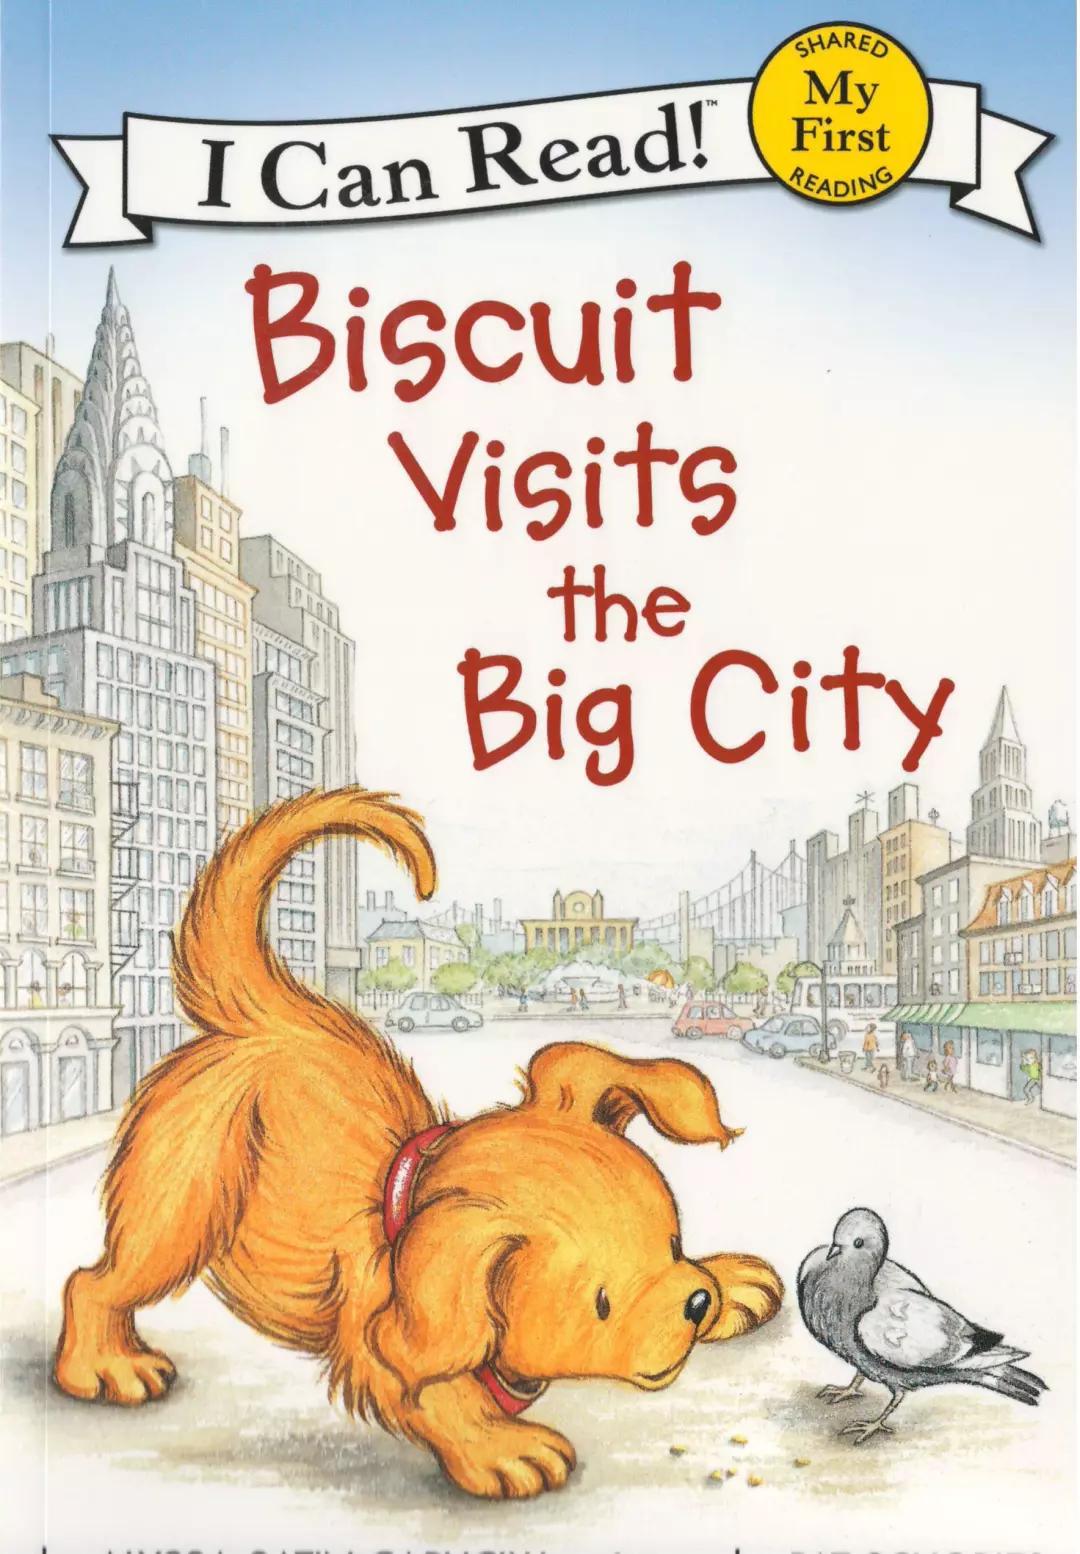 绘本共读丨城市奇妙之旅《biscuit visits the big city》